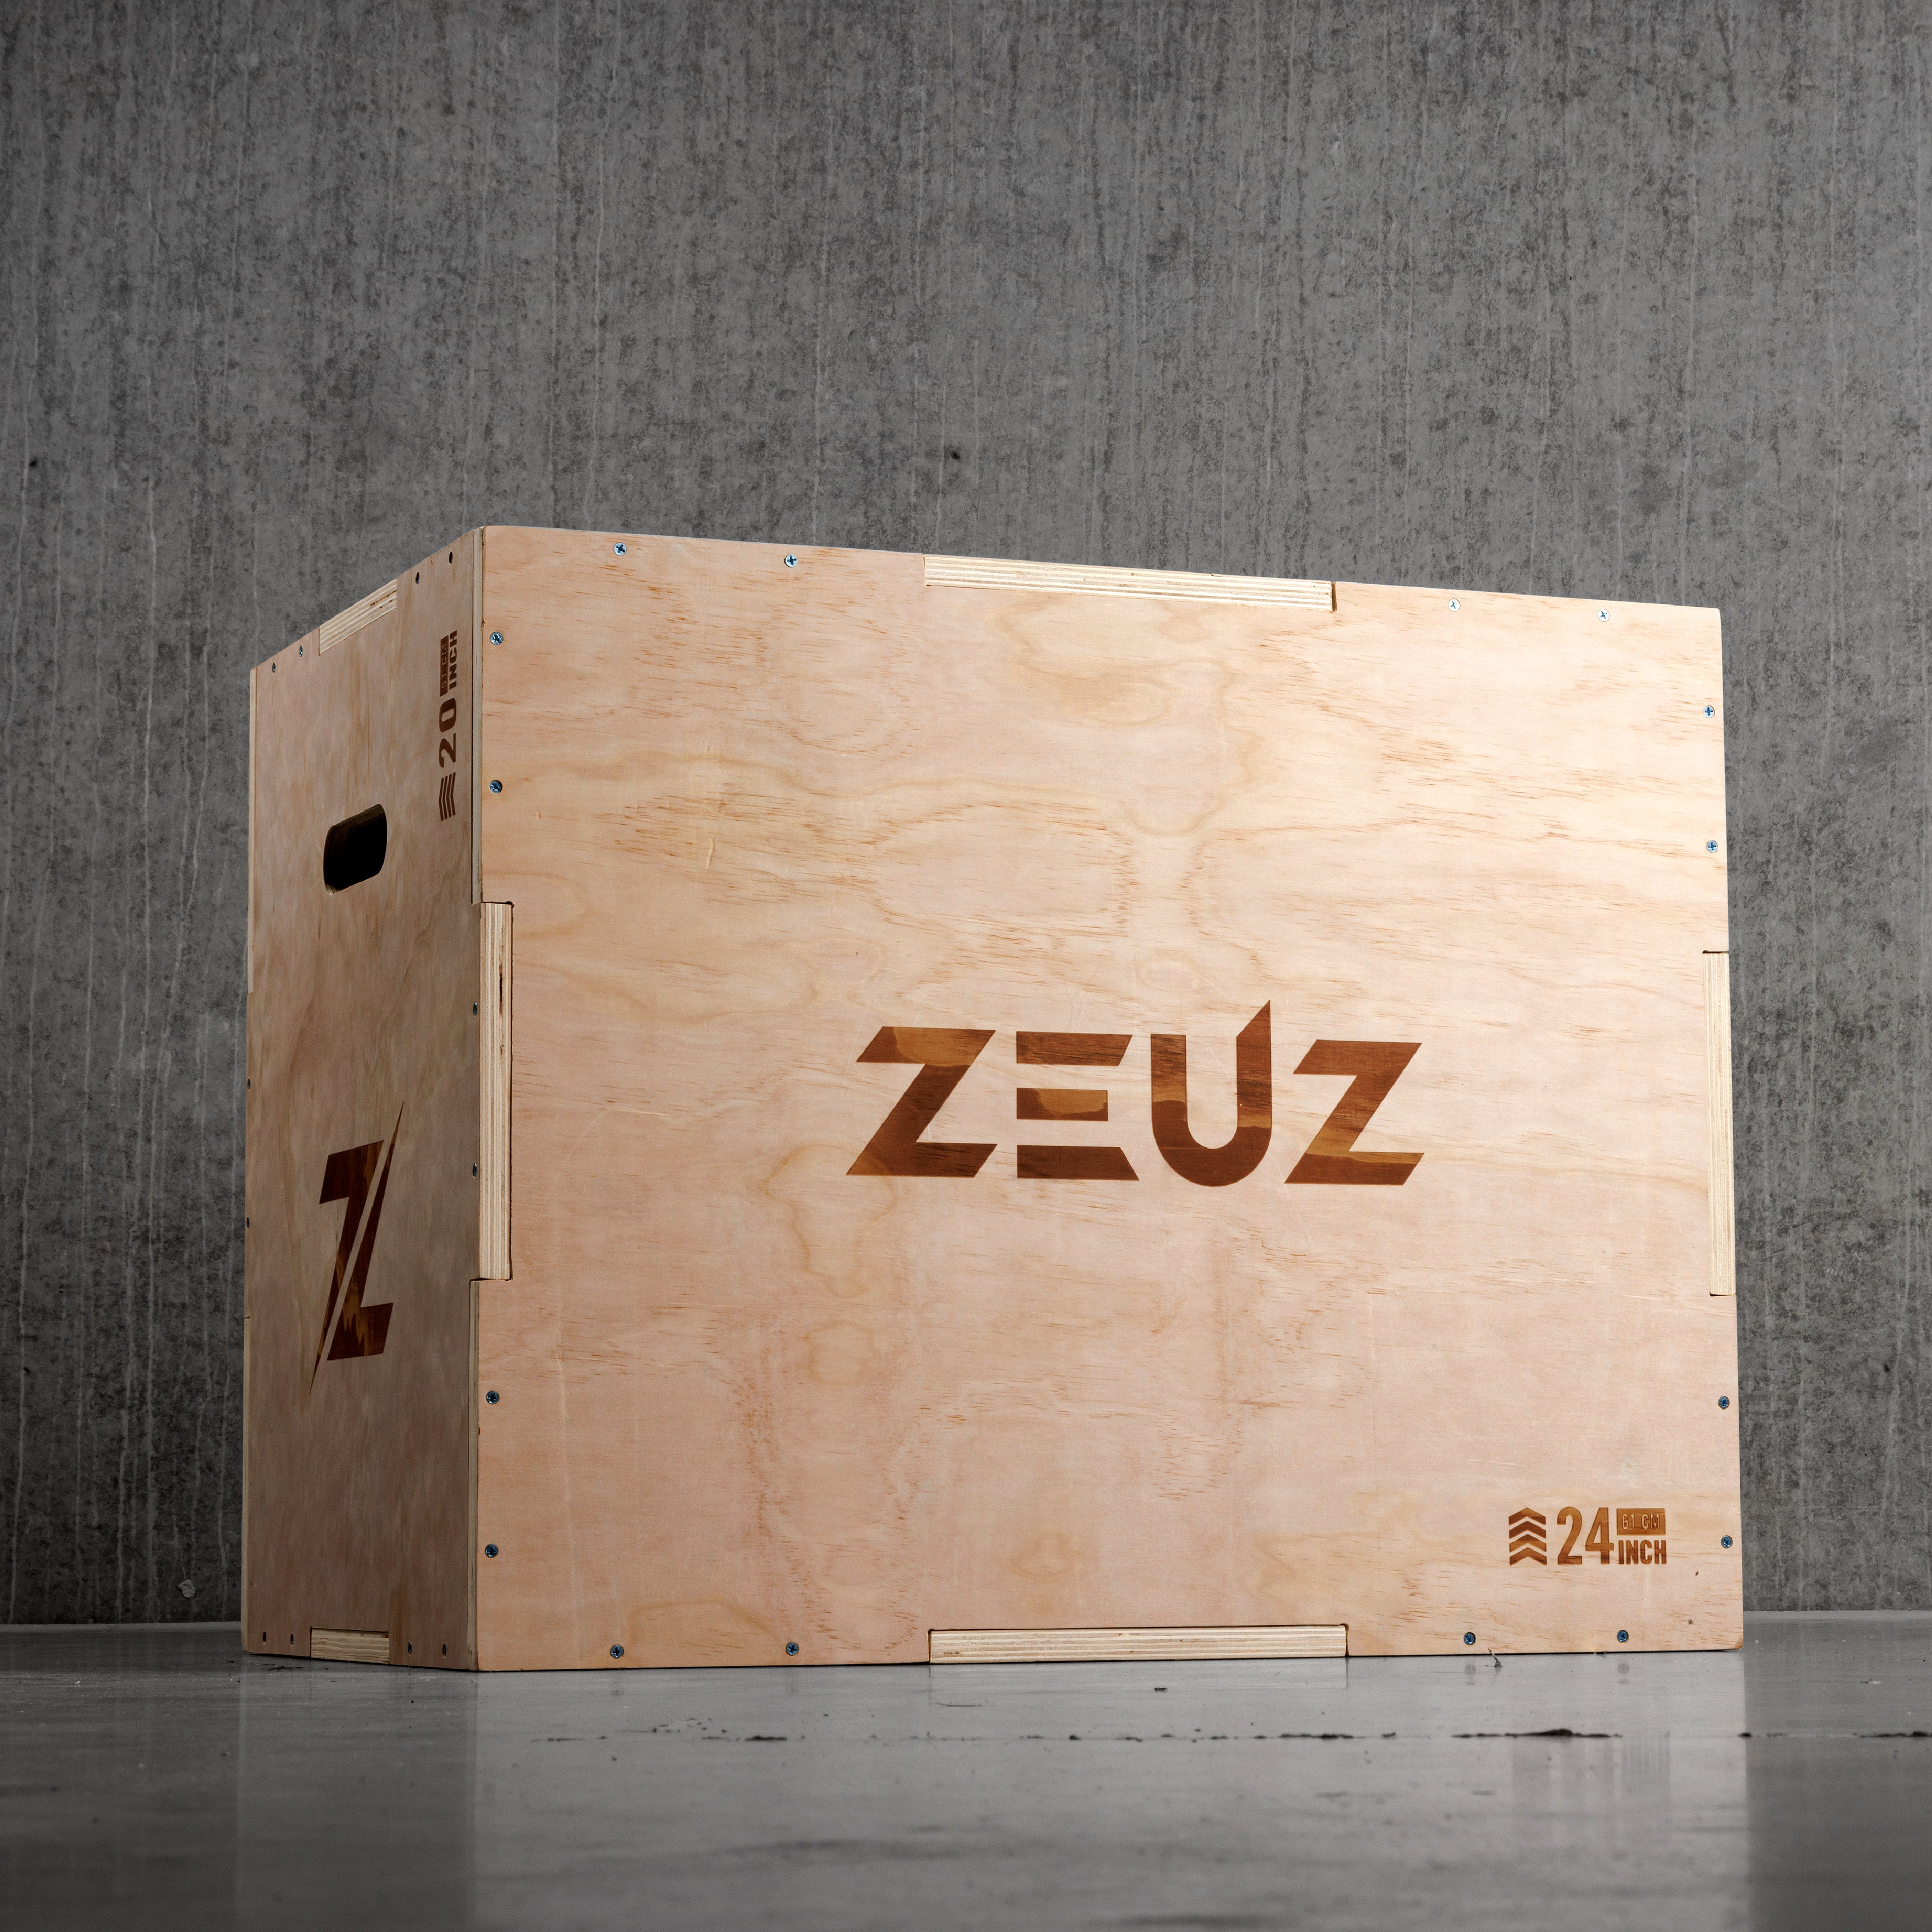 ZEUZ Wooden Plyo Box - Box Jump